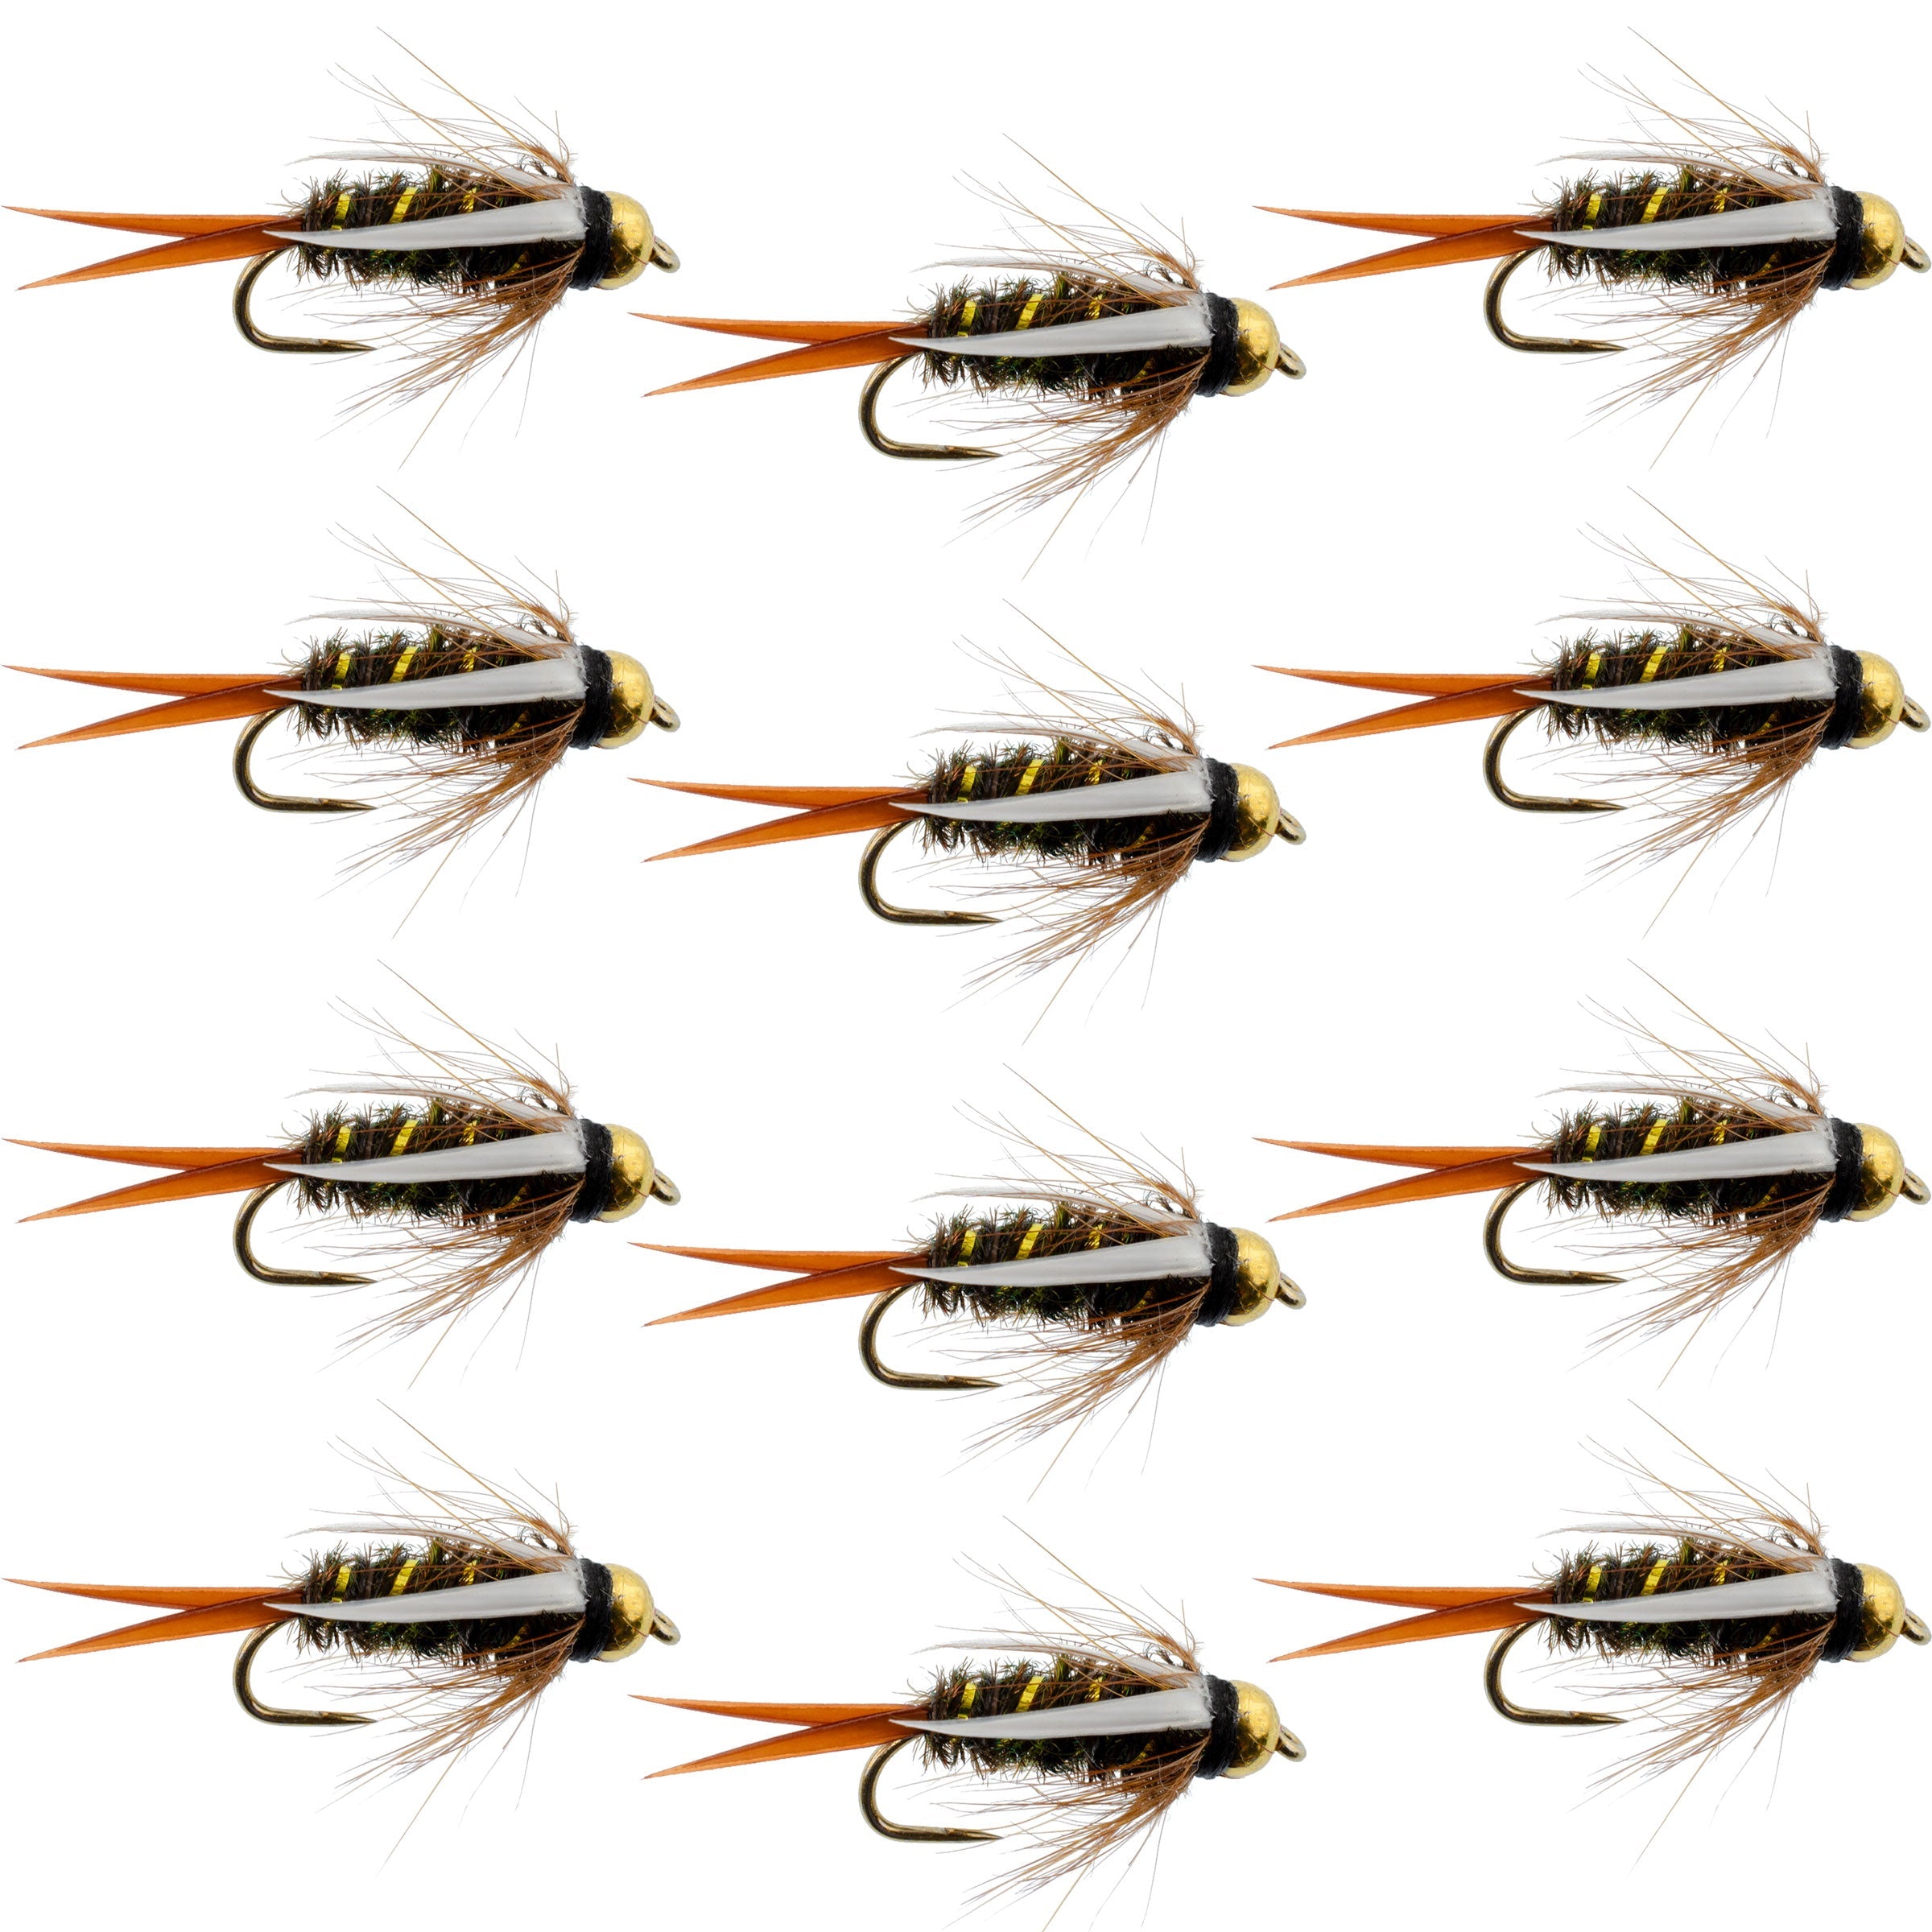 Barbless Bead Head Prince Nymph Fly Fishing Flies - 1 Dozen Flies Hook Size 14